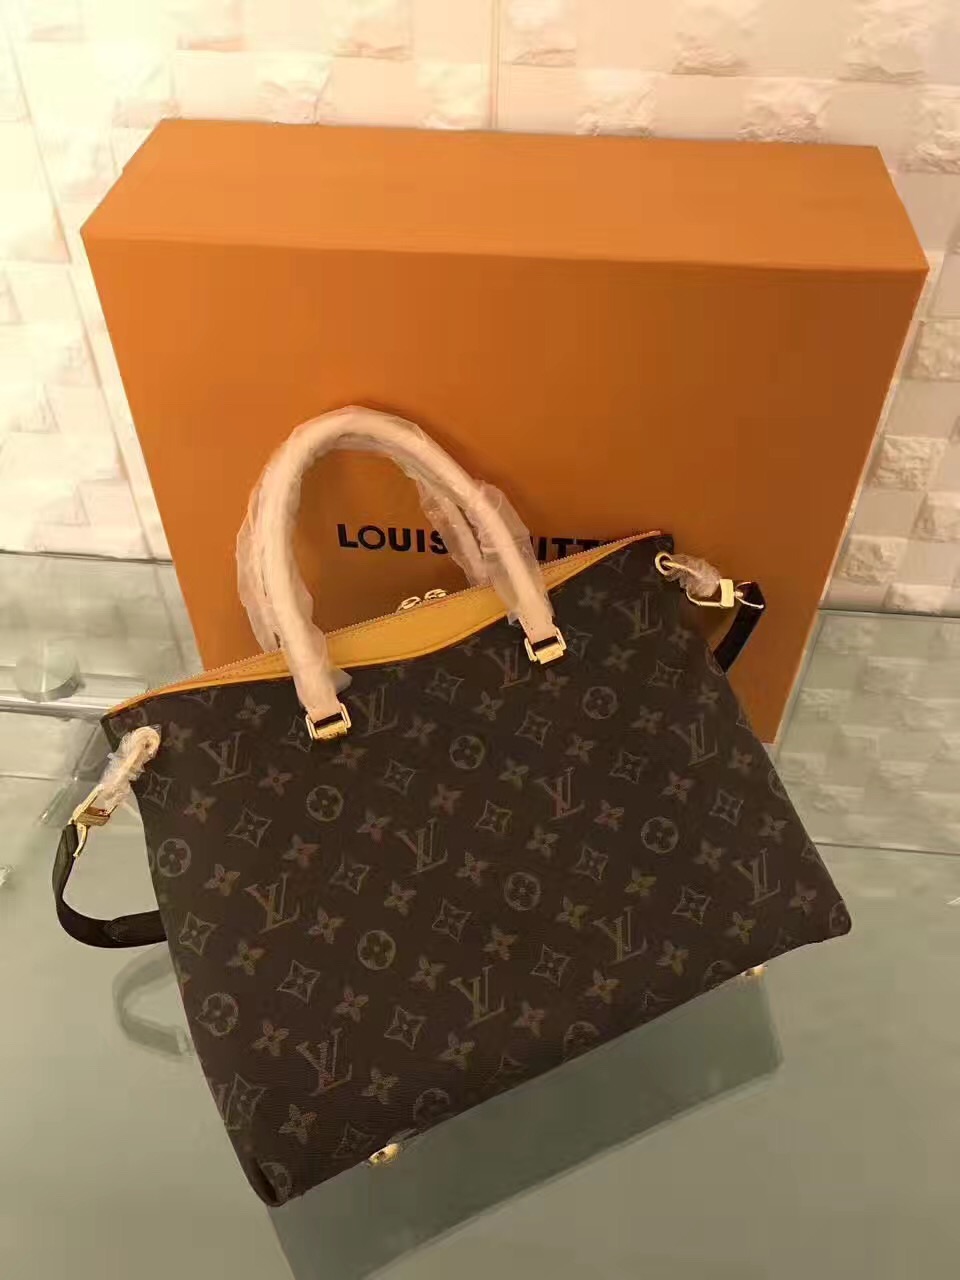 Louis Vuitton Handbags 2000  Natural Resource Department